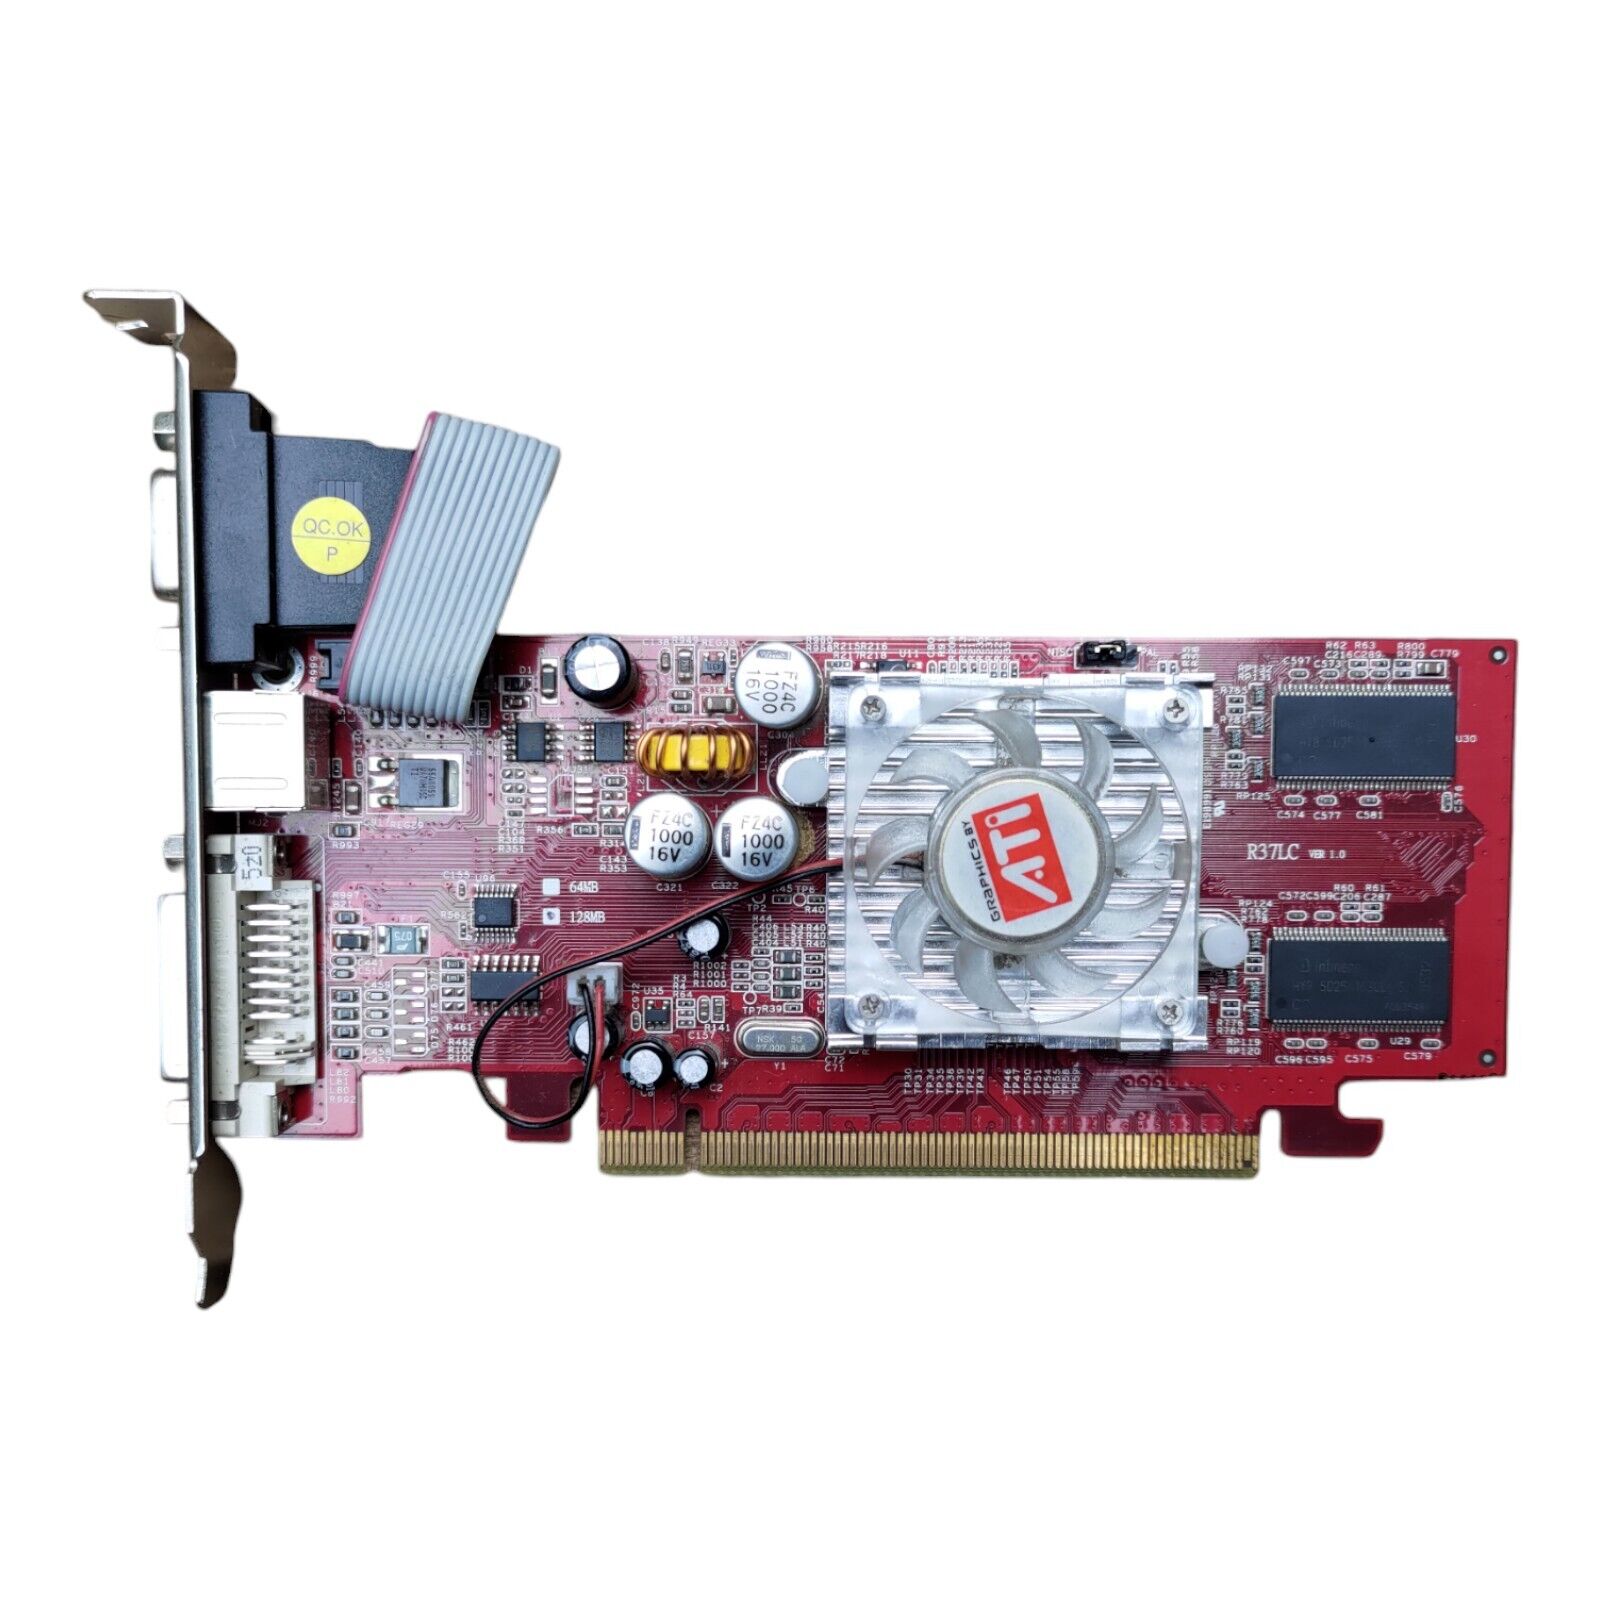 ATI Radeon X300 SE HyperMemory 256MB DVI-I VGA S-Video Video Card